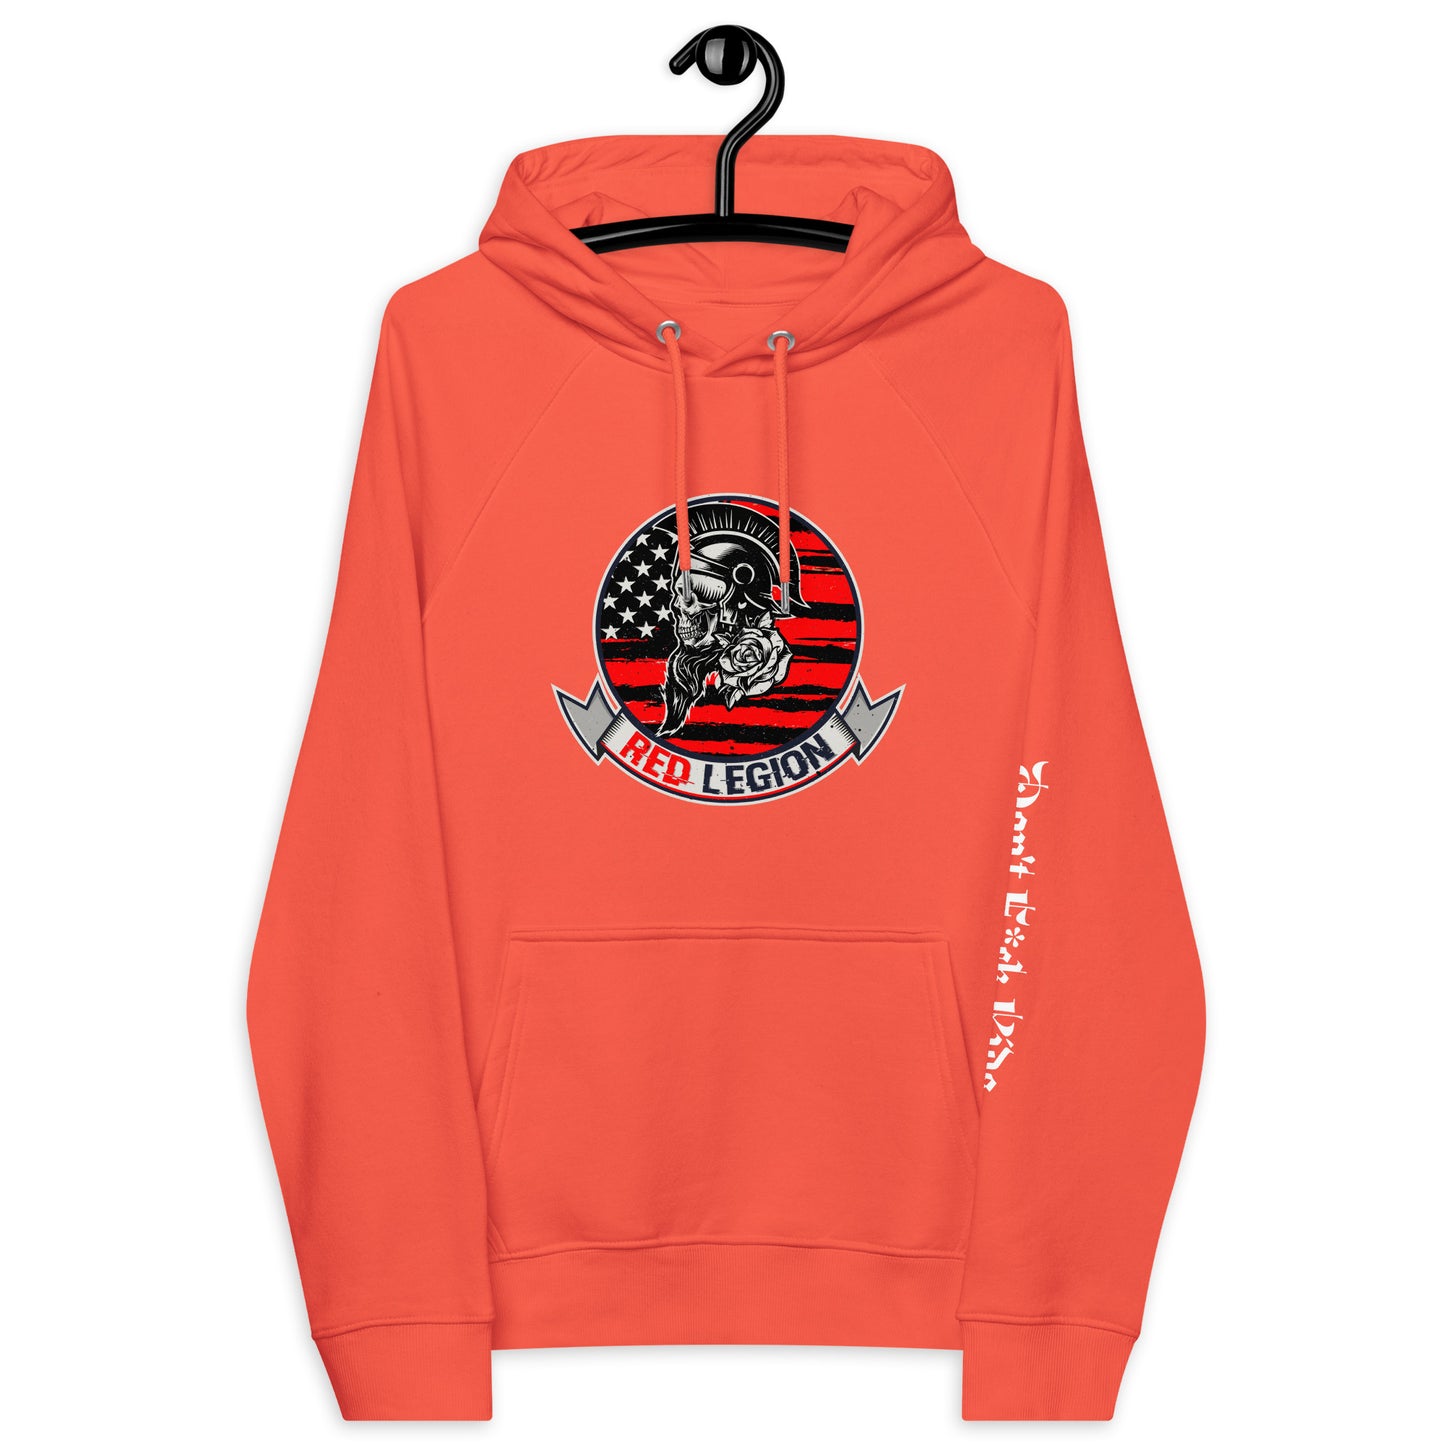 Red Legion - Don't F*ck Kids - Unisex eco raglan hoodie